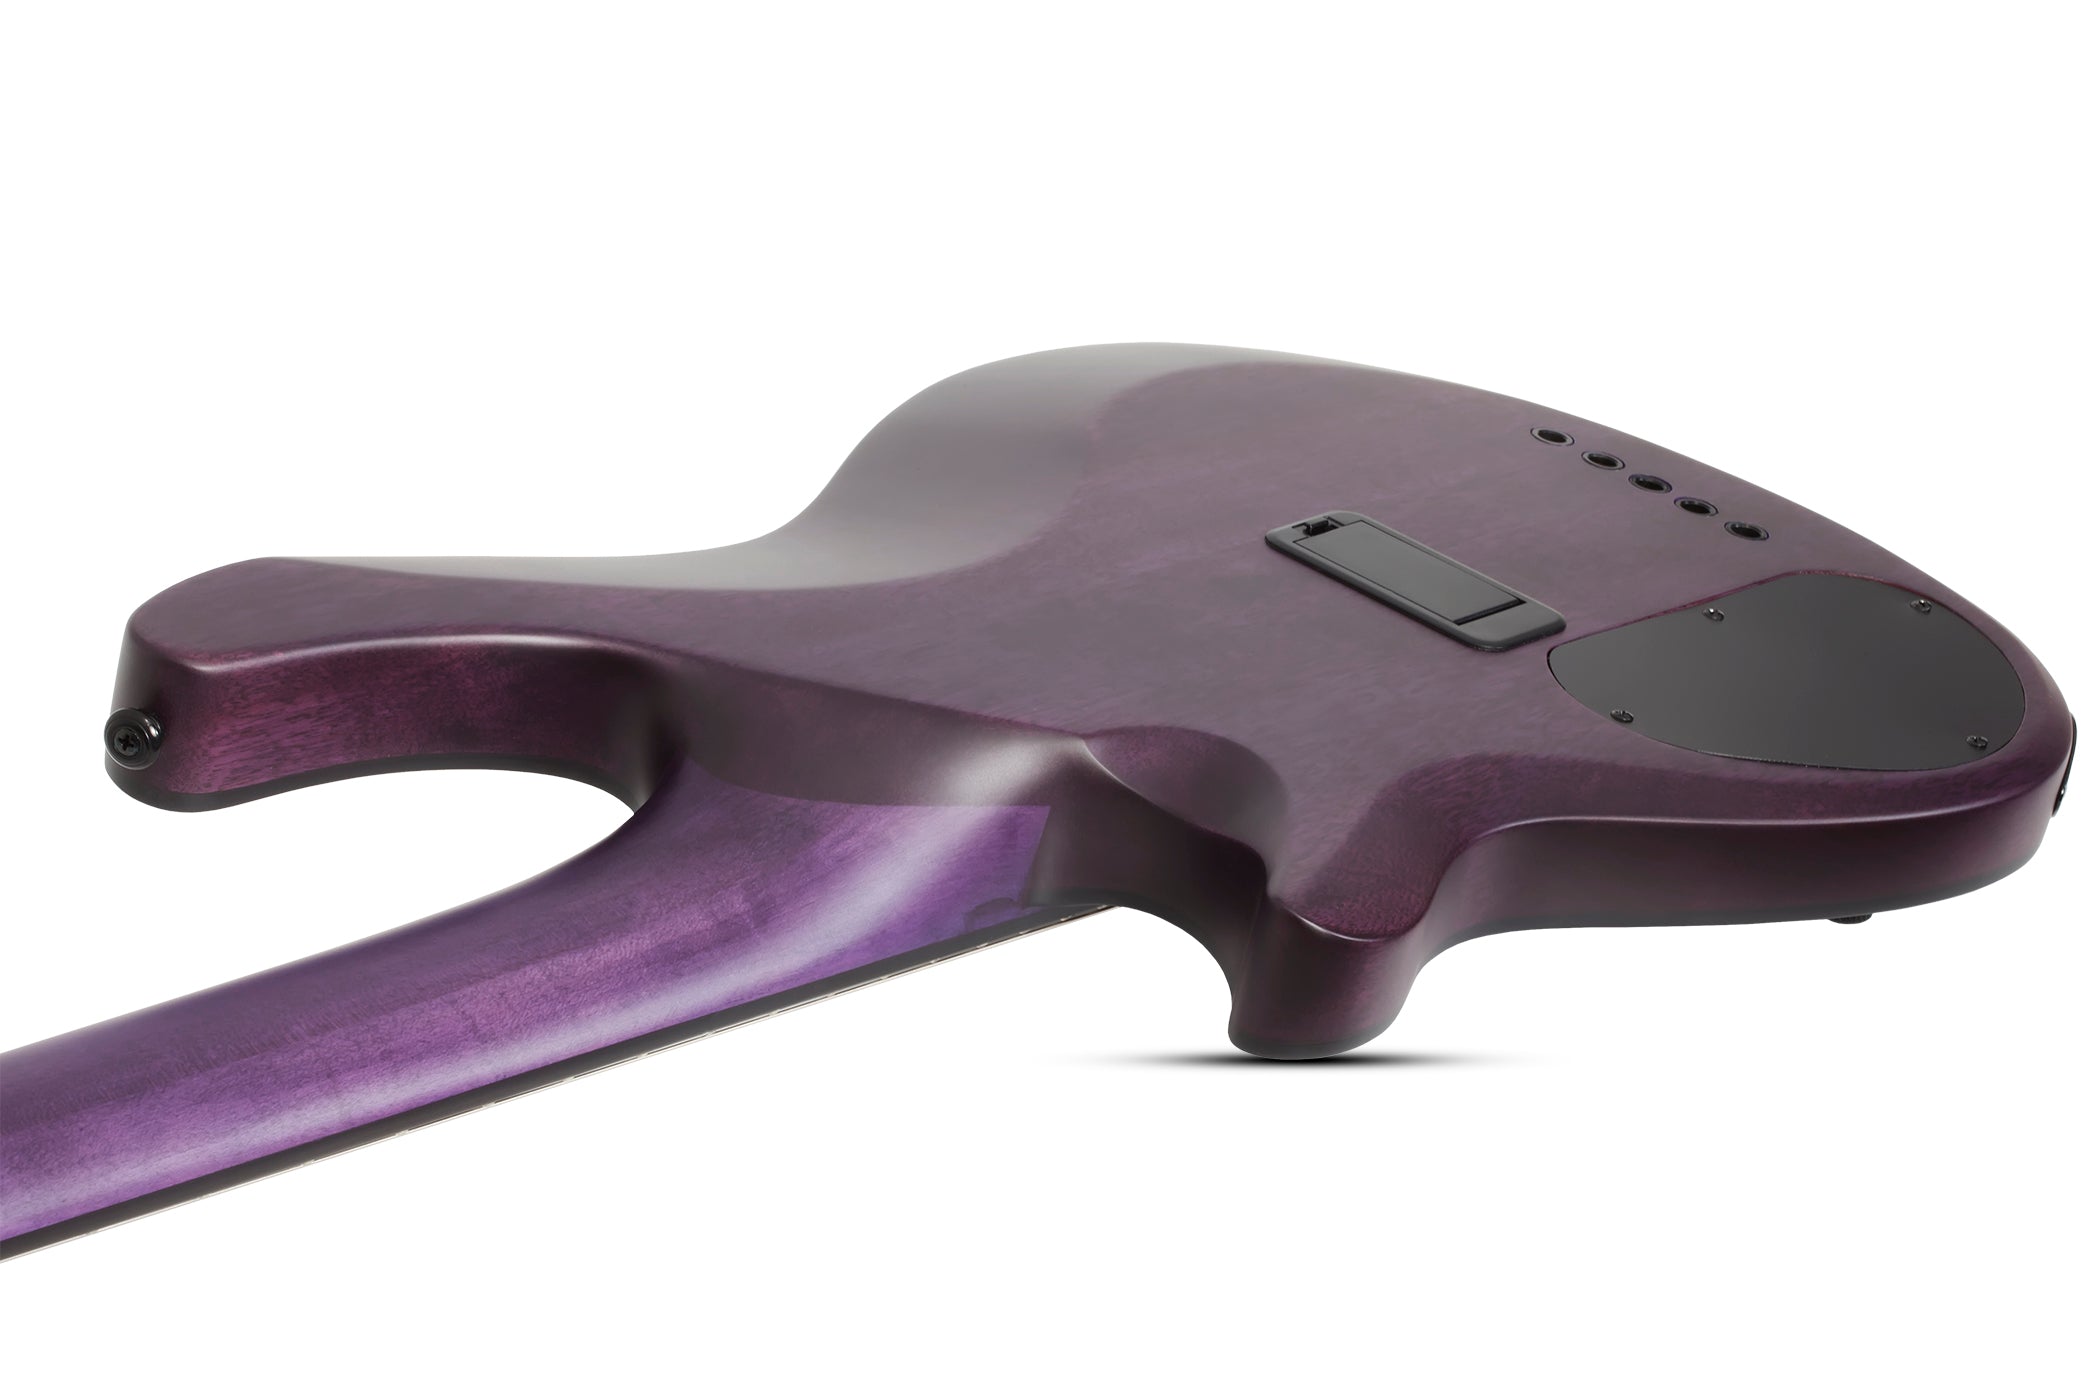 Schecter C-5 GT 5 SRING Electric Bass Satin Trans Purple 1533-SHC